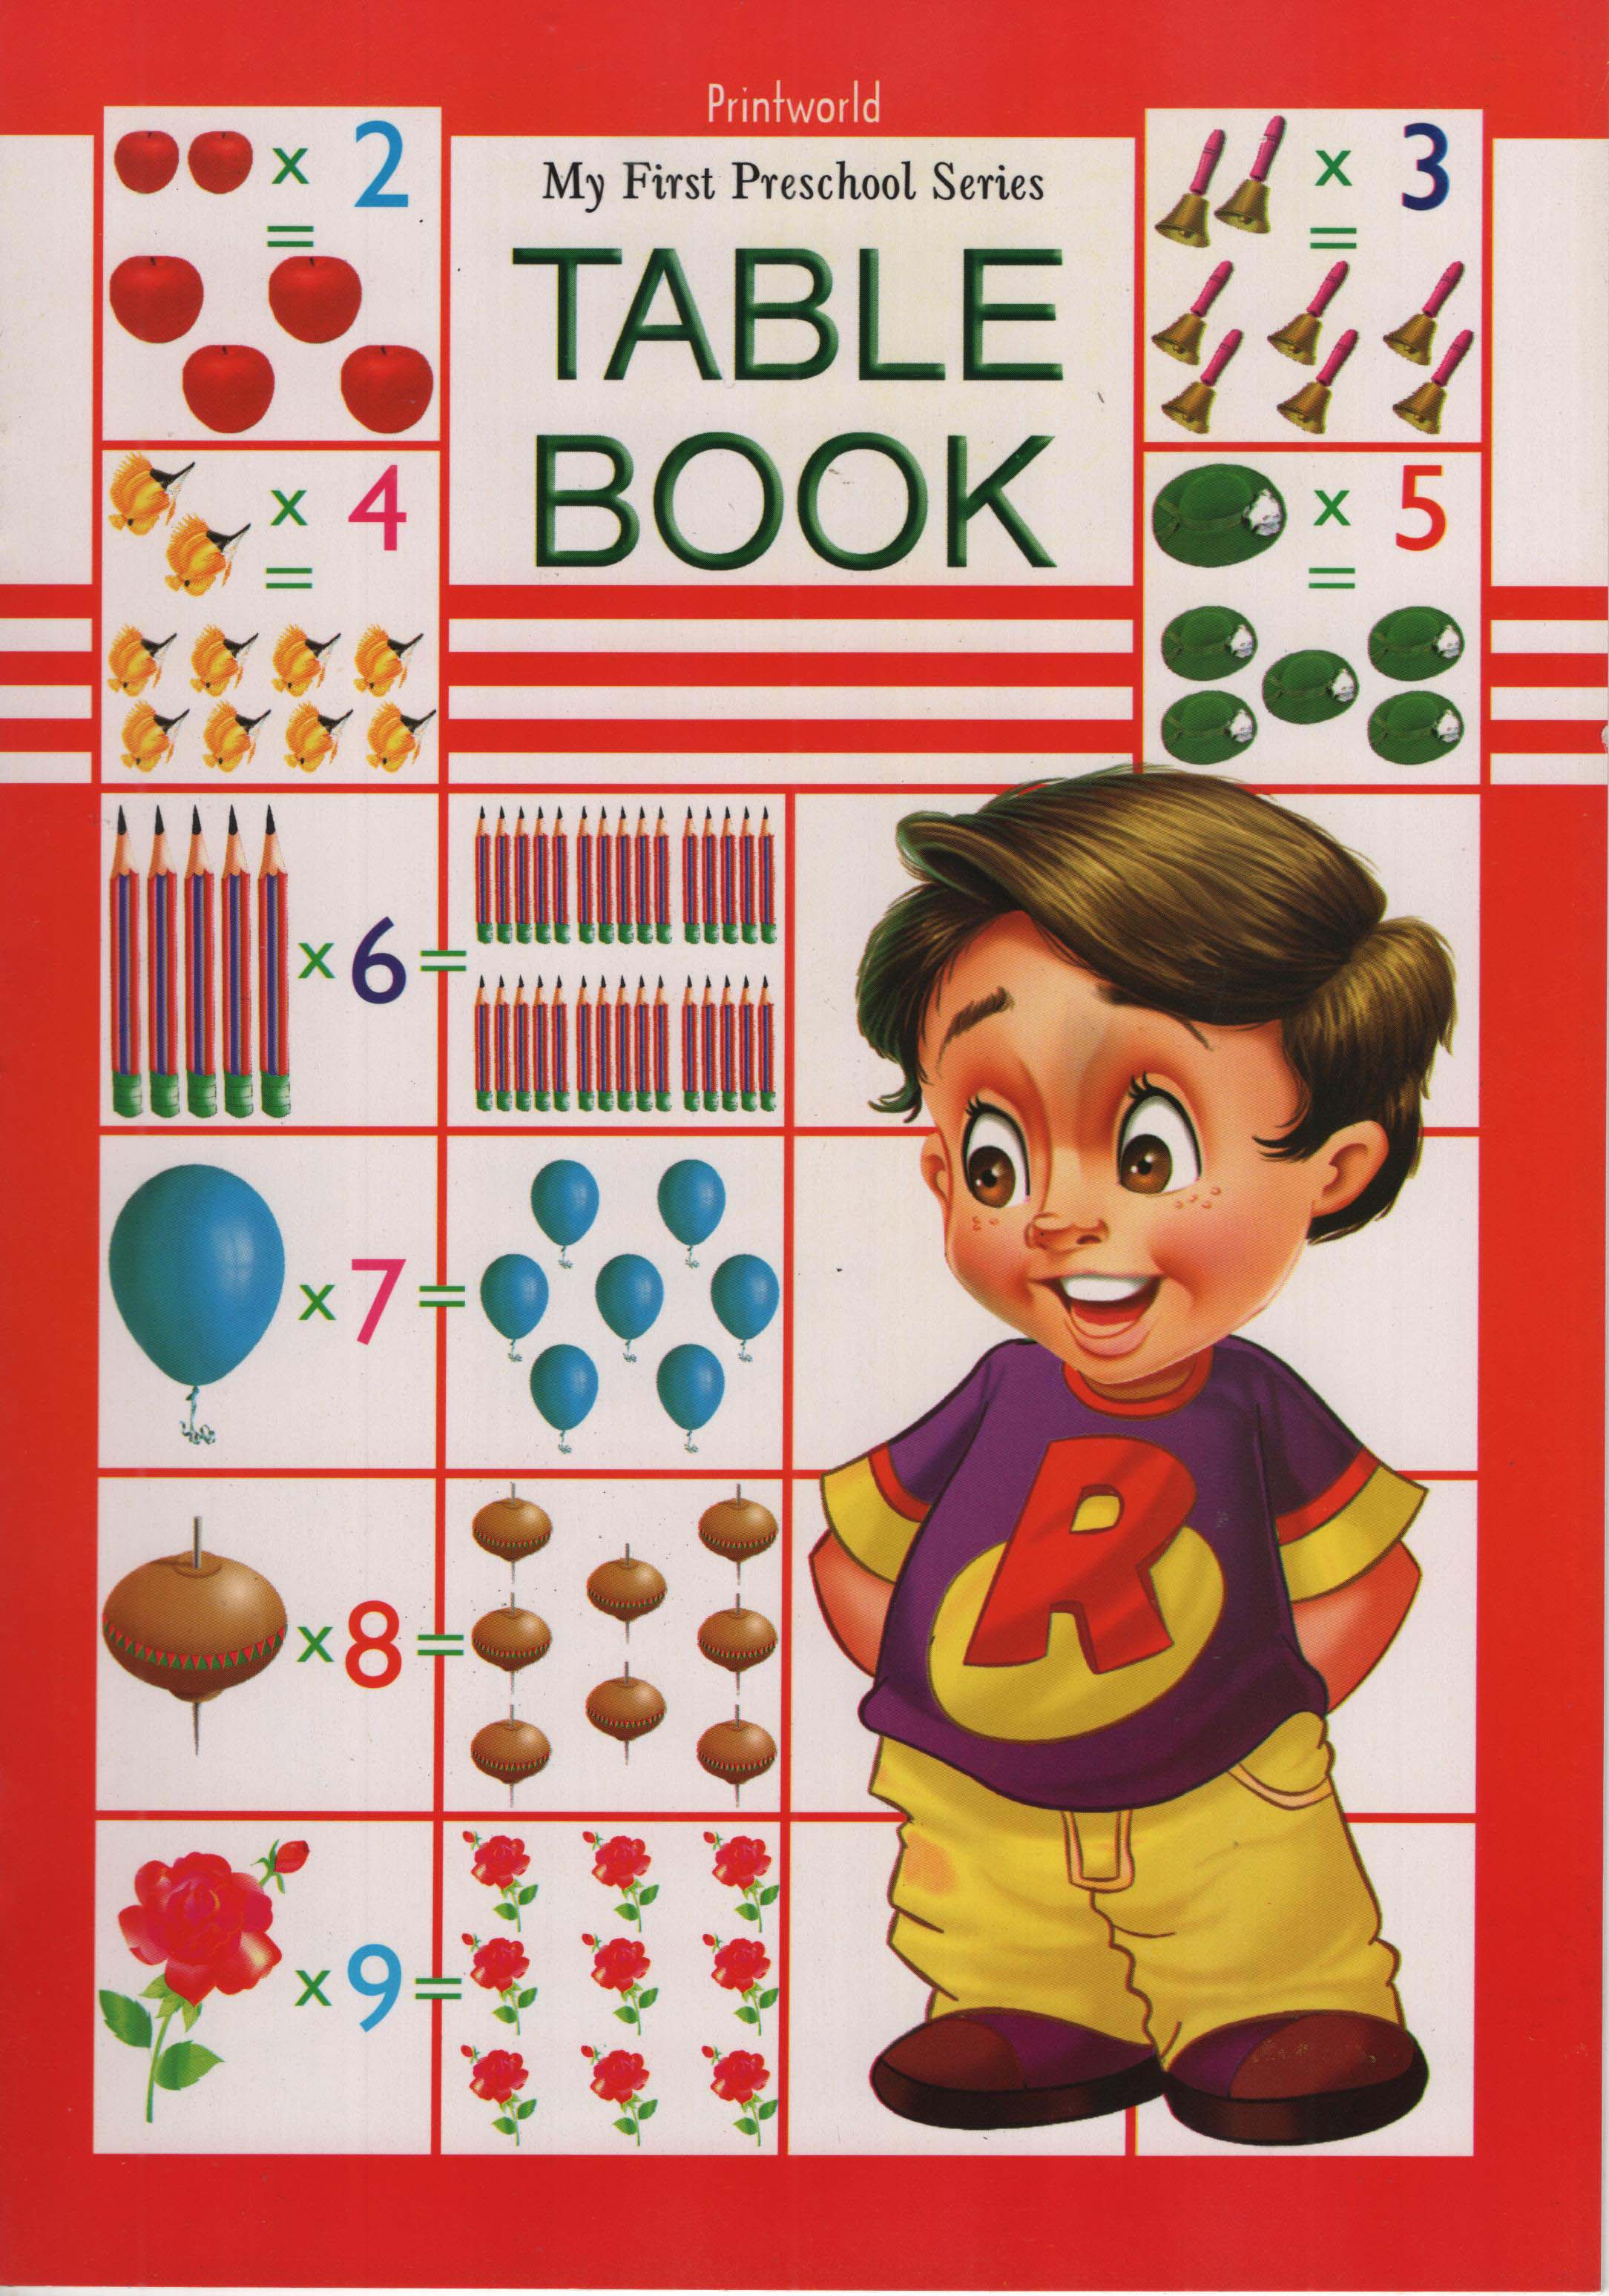 Printworld My First Preschool Series : Table Book